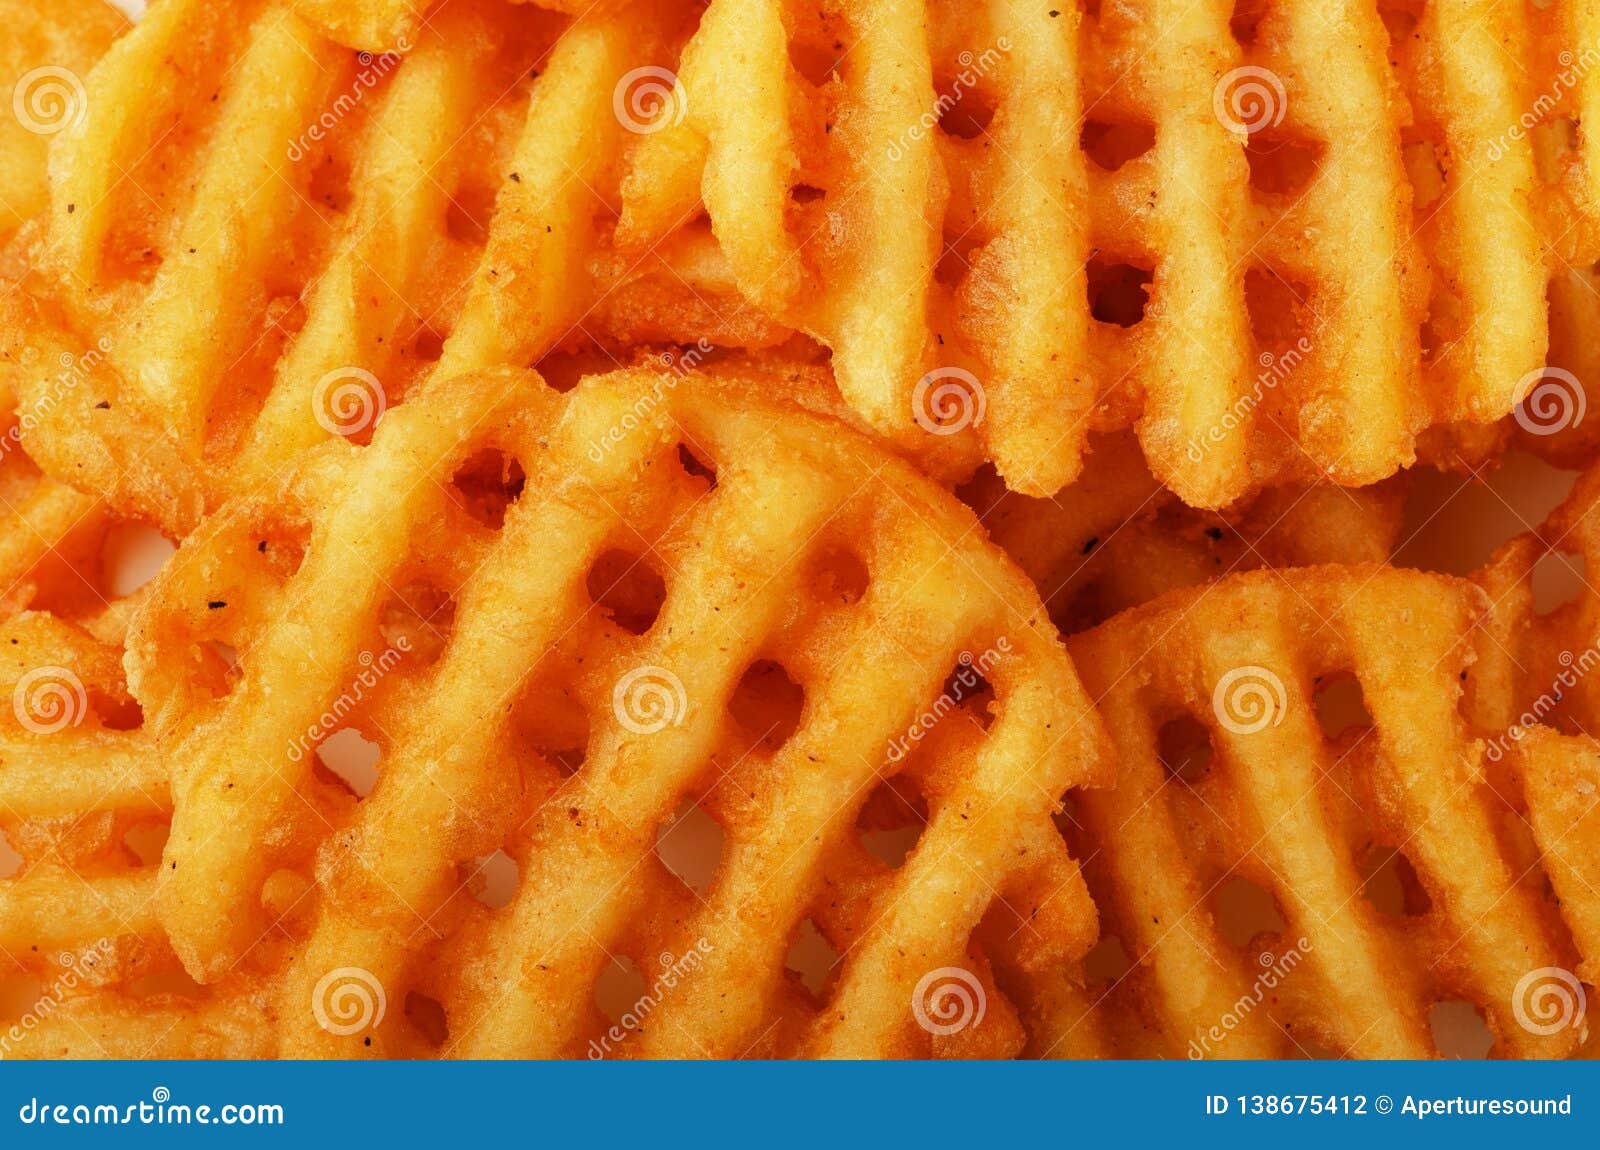 Crispy Potato Waffles Fries Wavy Crinkle Cut Criss Cross Cries Stock Photo Image Of Dish Junk 138675412